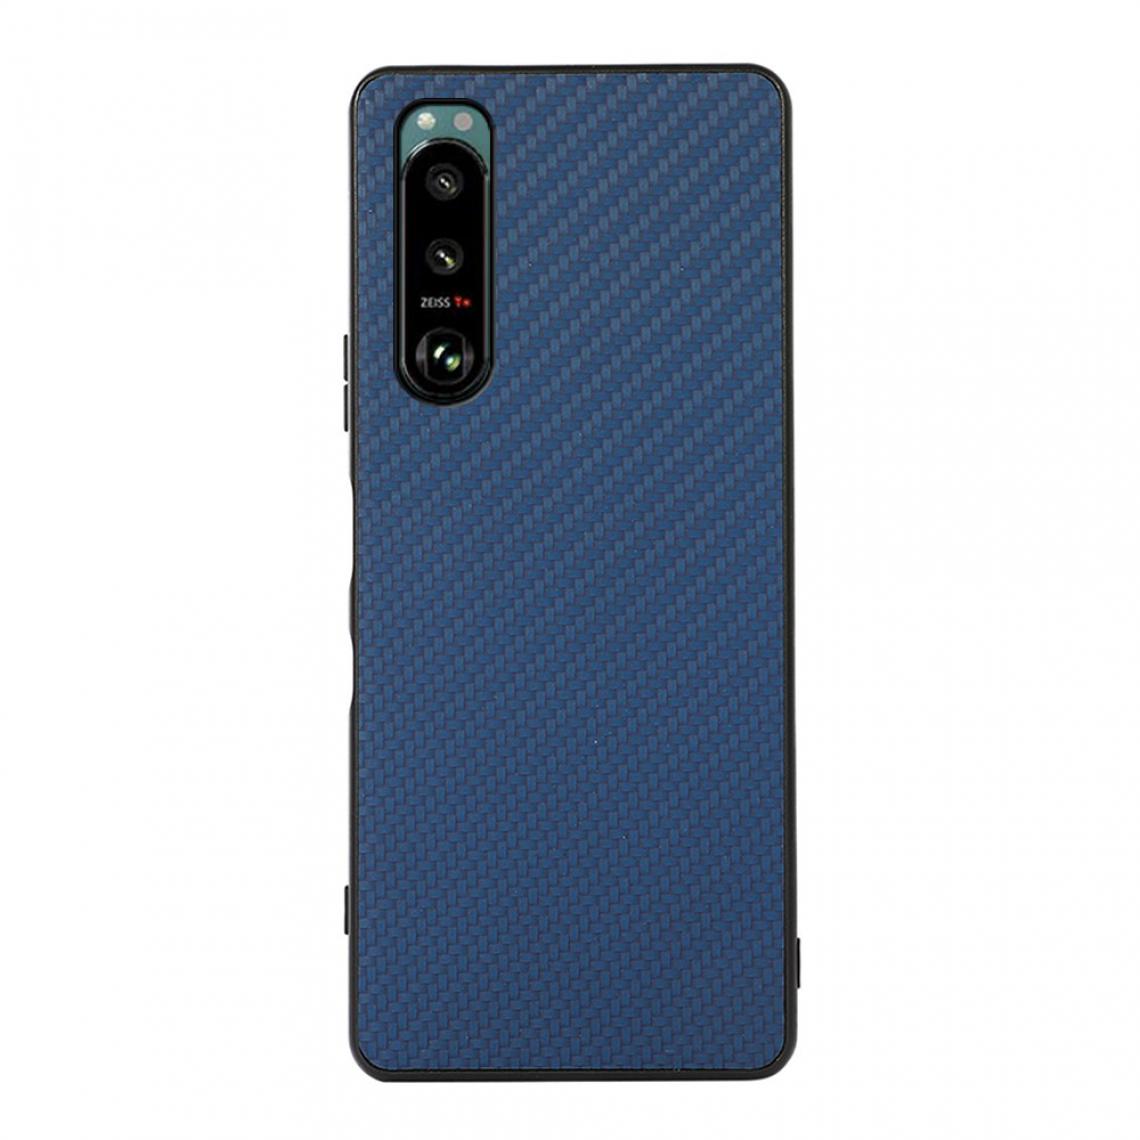 Other - Coque en TPU + PU Texture de fibre de carbone bleu pour votre Sony Xperia 5 III - Coque, étui smartphone